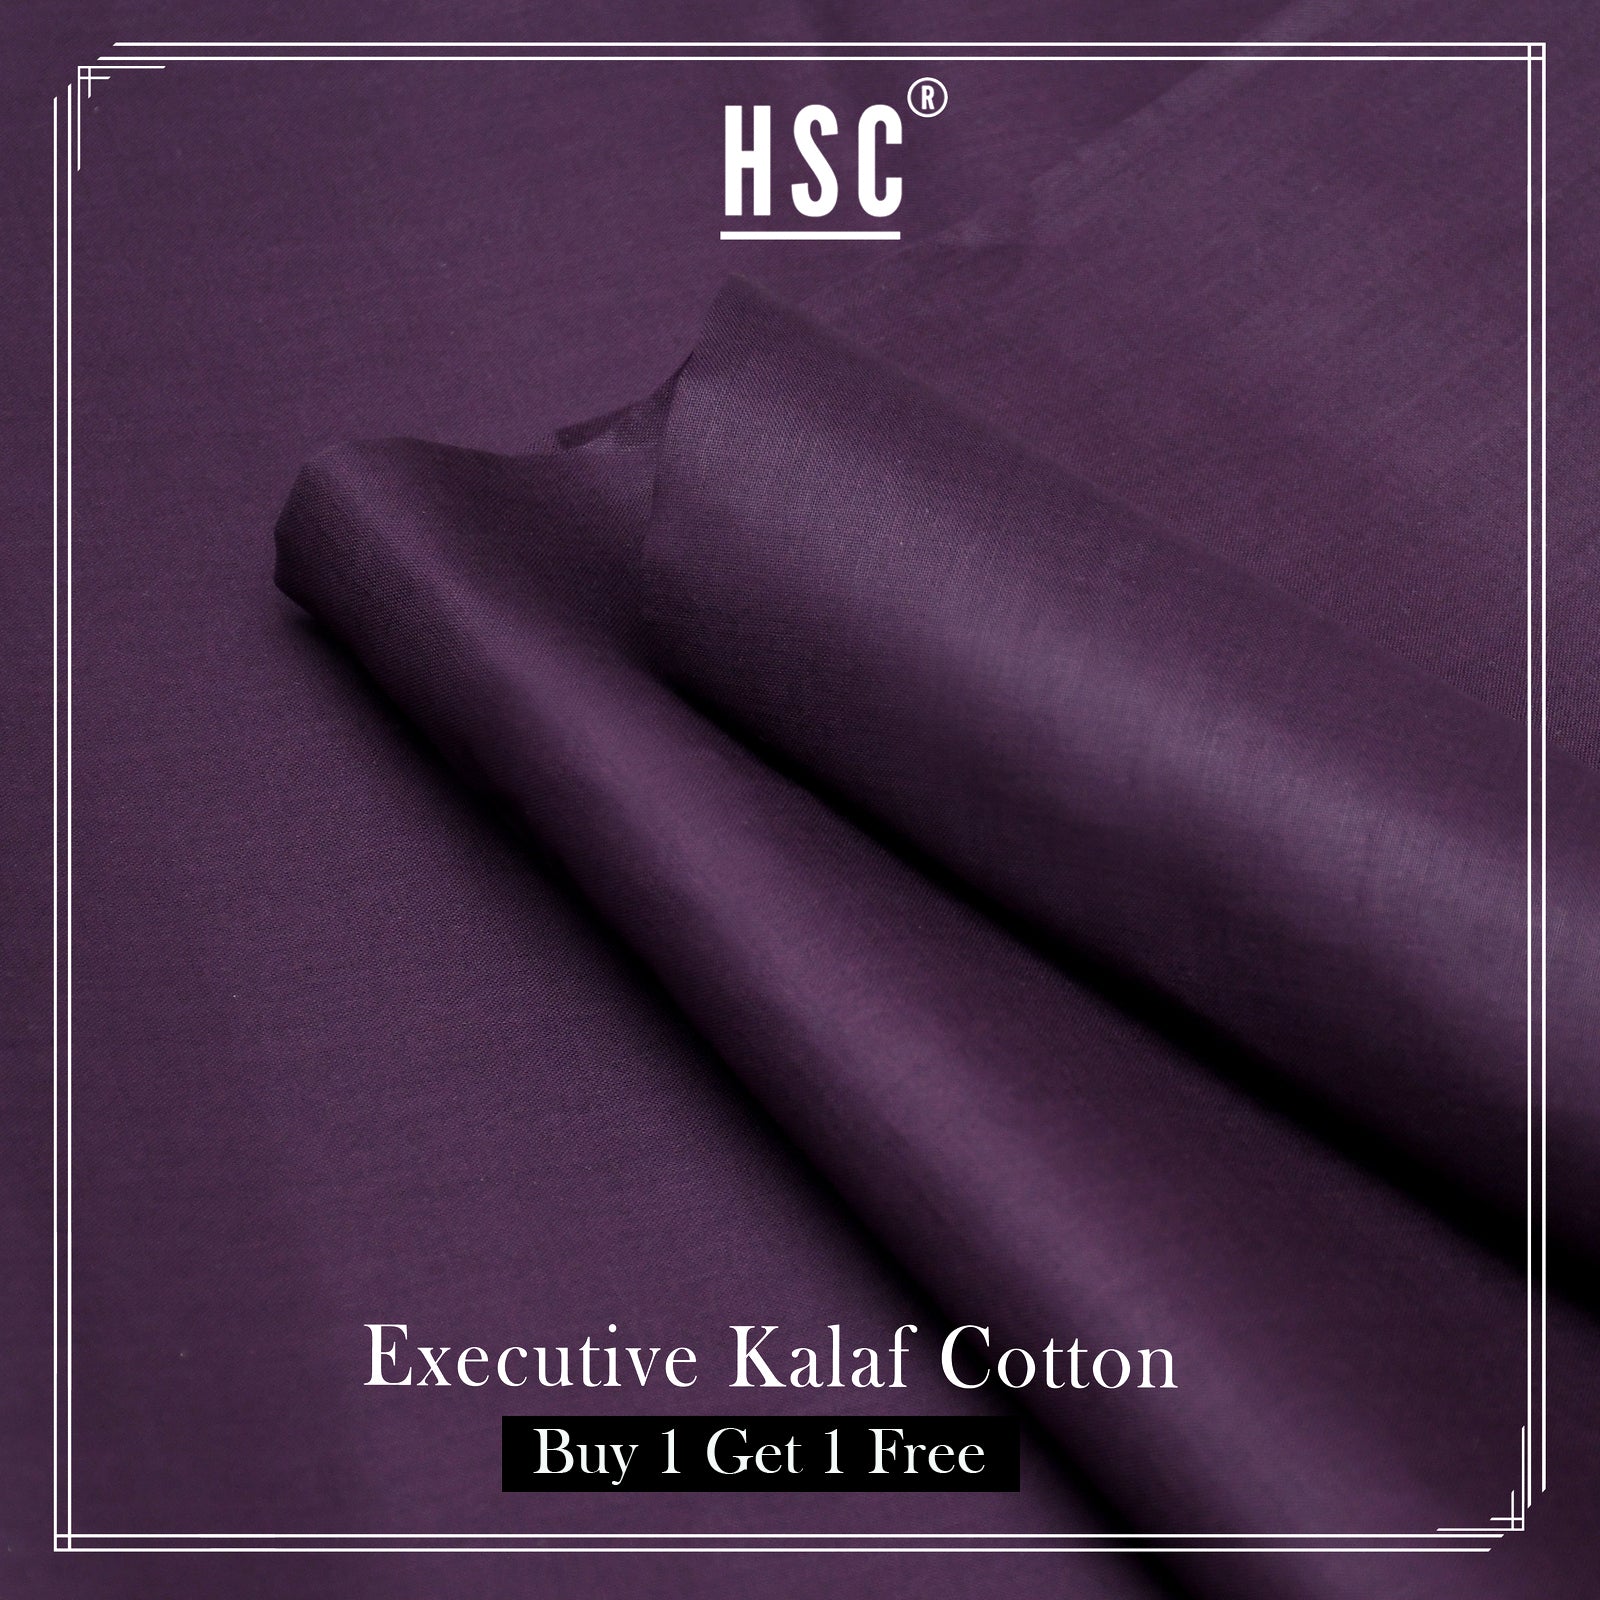 Executive Kalaf Cotton Buy 1 Get 1 Free Offer! - EKC15 100% Cotton